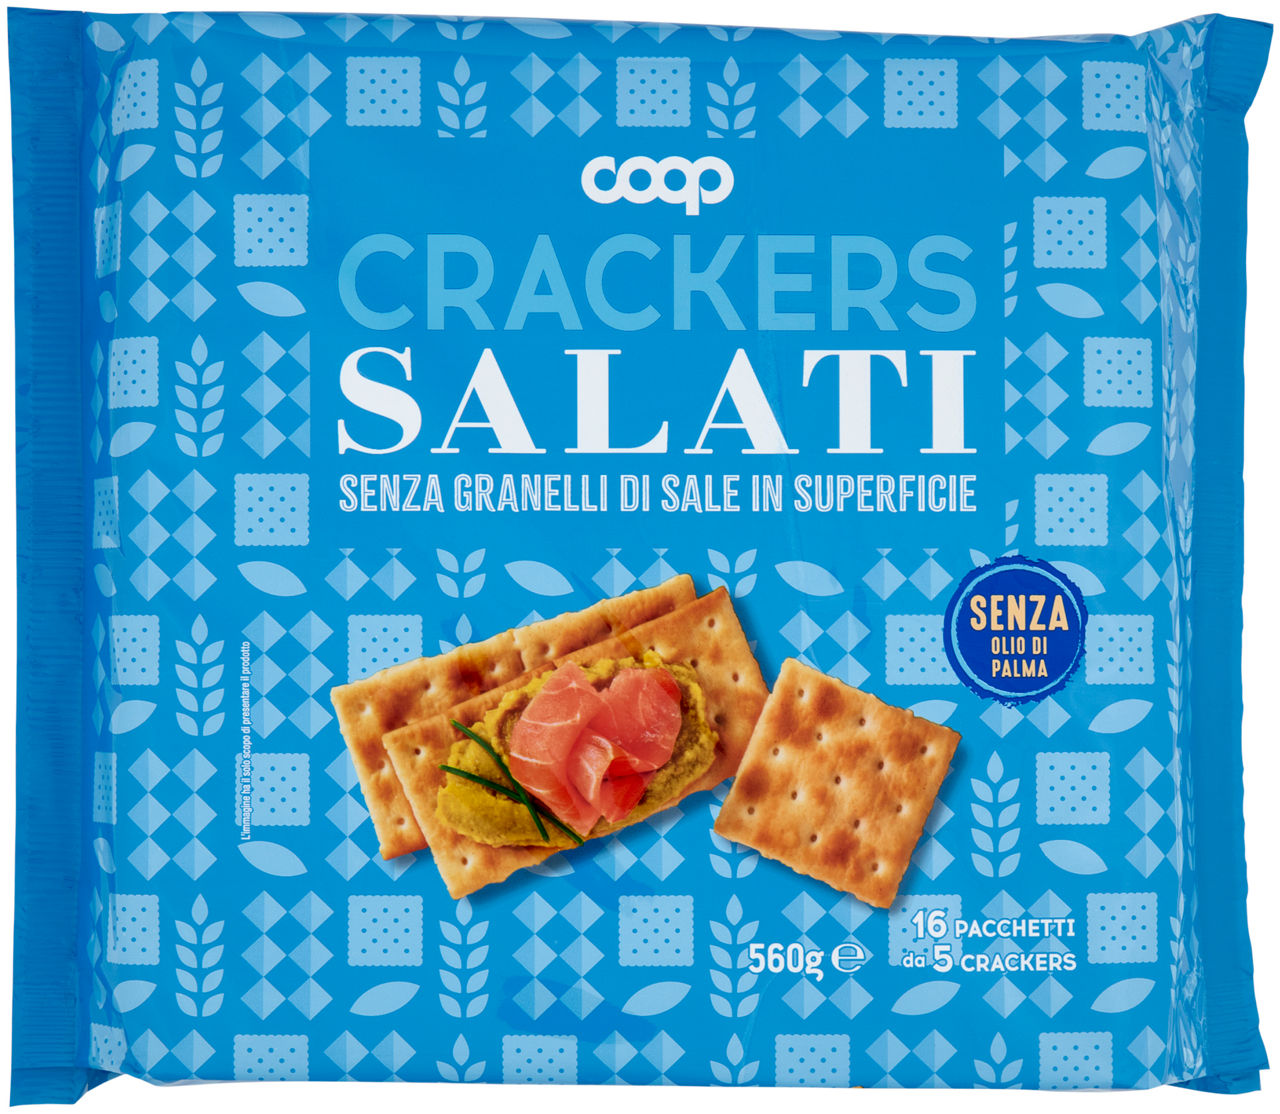 Crackers salati senz/granelli di sale in superficie coop incarto gr.560 no palma